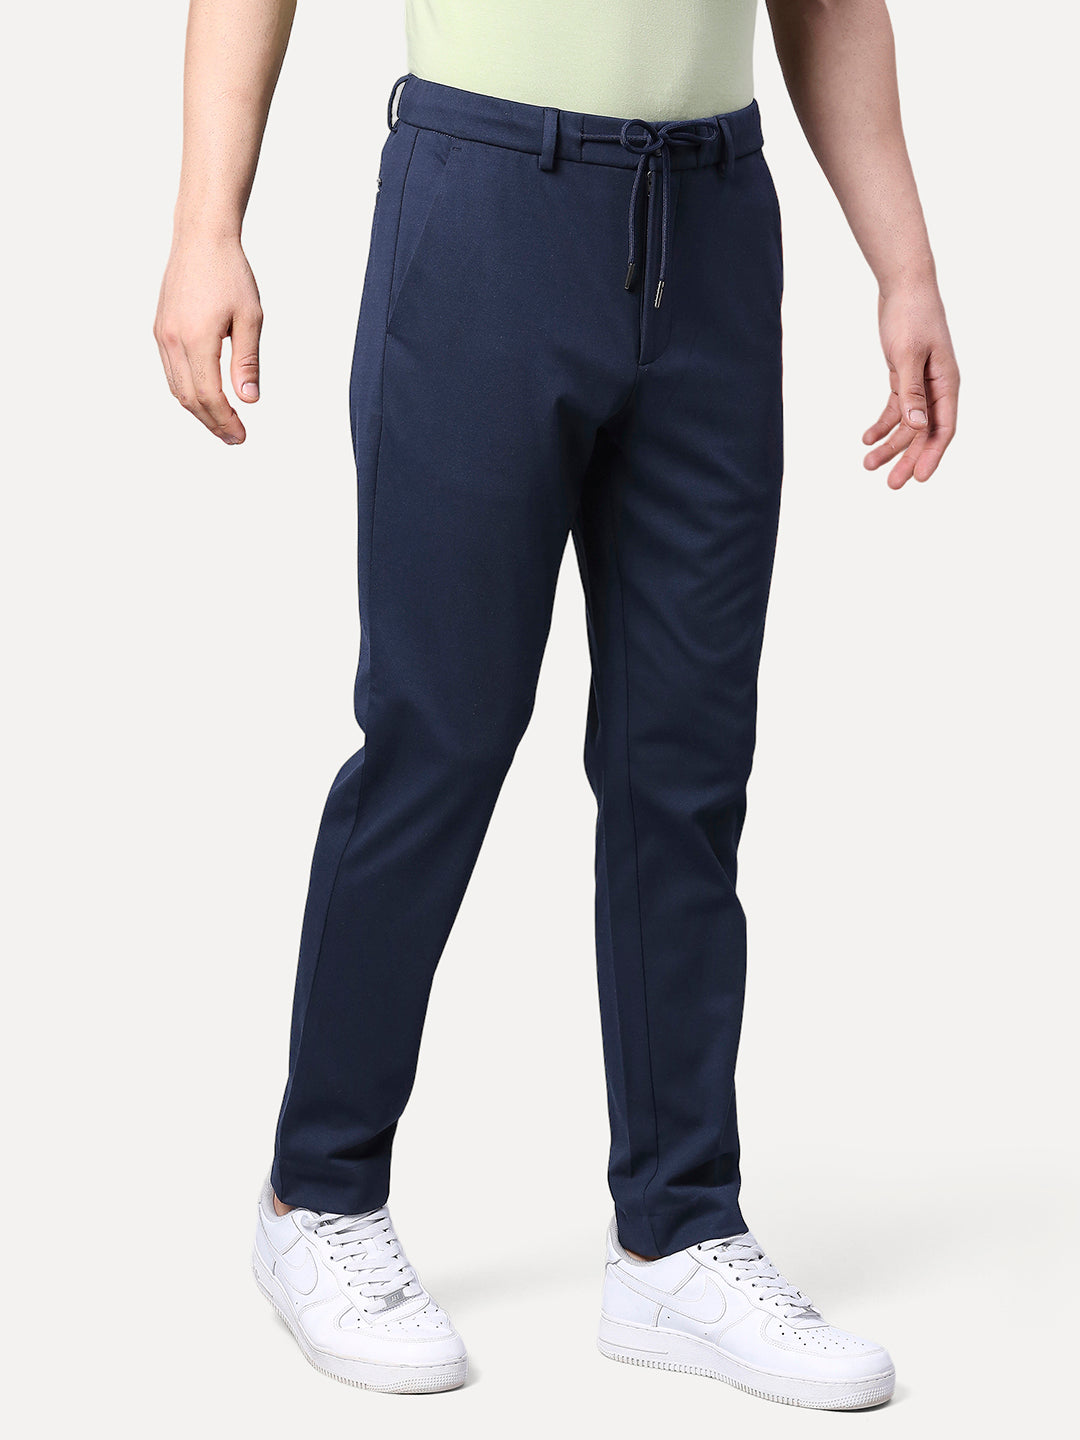 Dark Navy blue trousers